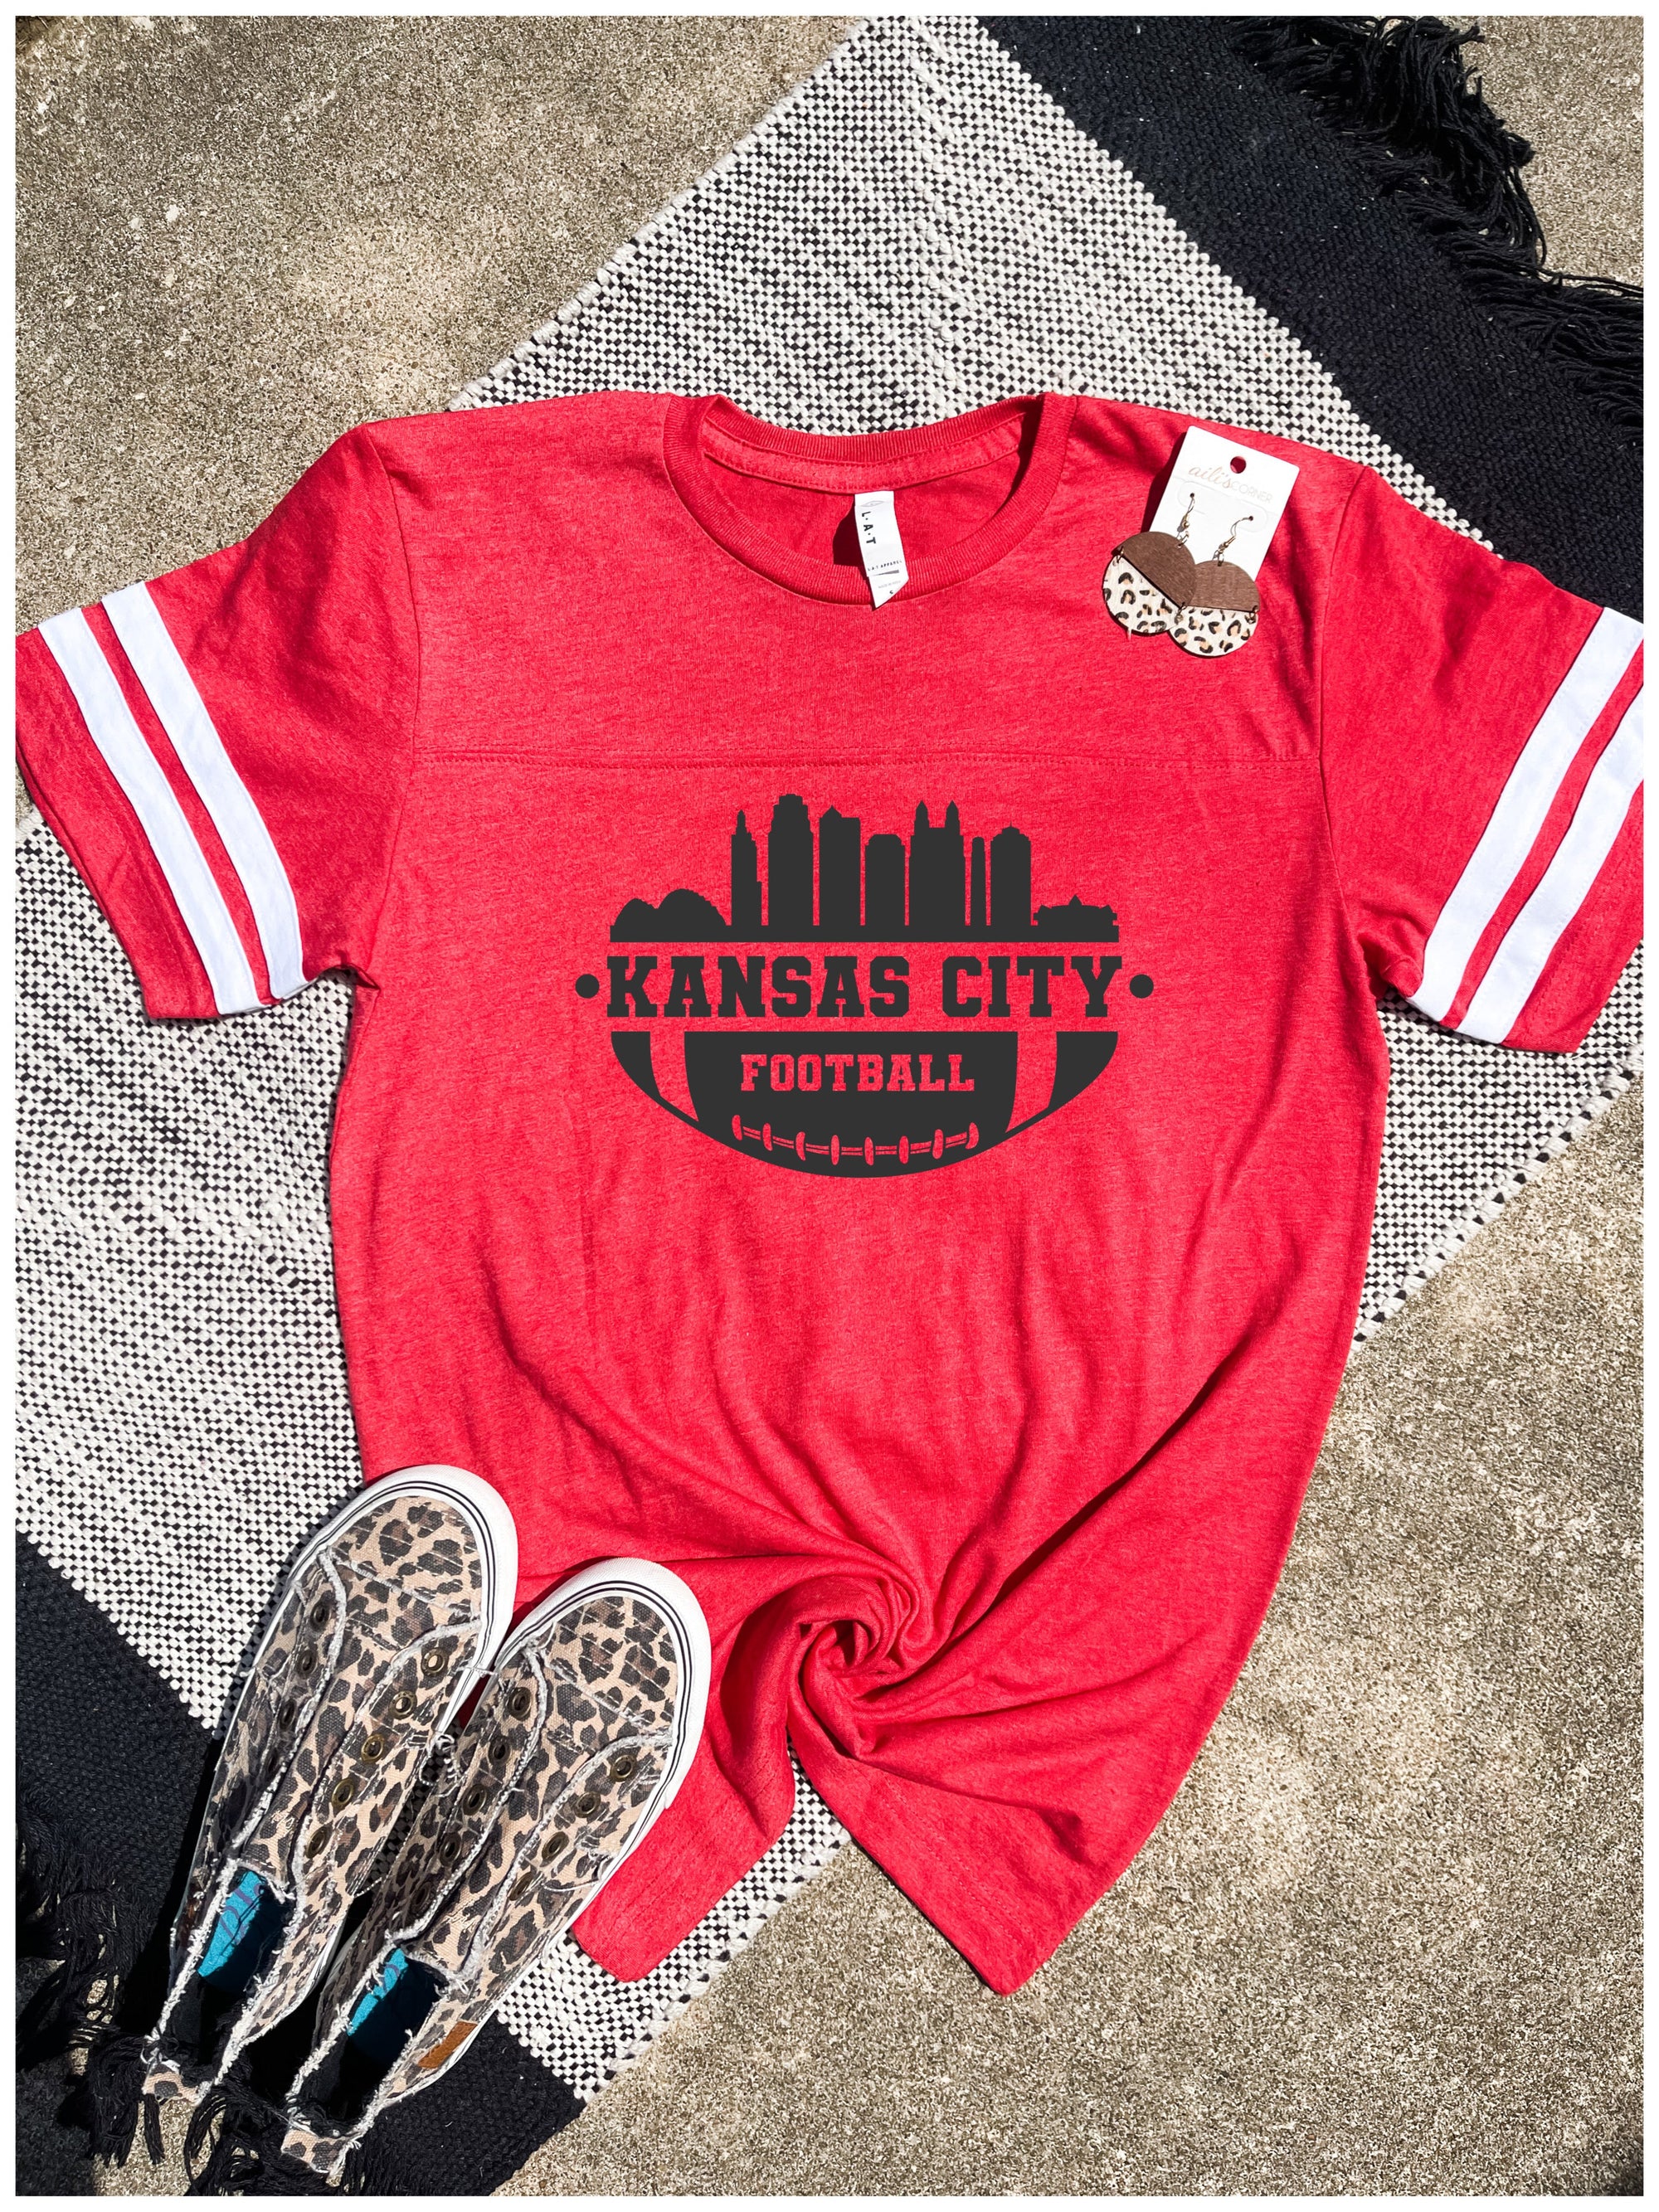 **HALFTIME DEAL** Kansas City Football Skyline Red Striped Sleeve Tee